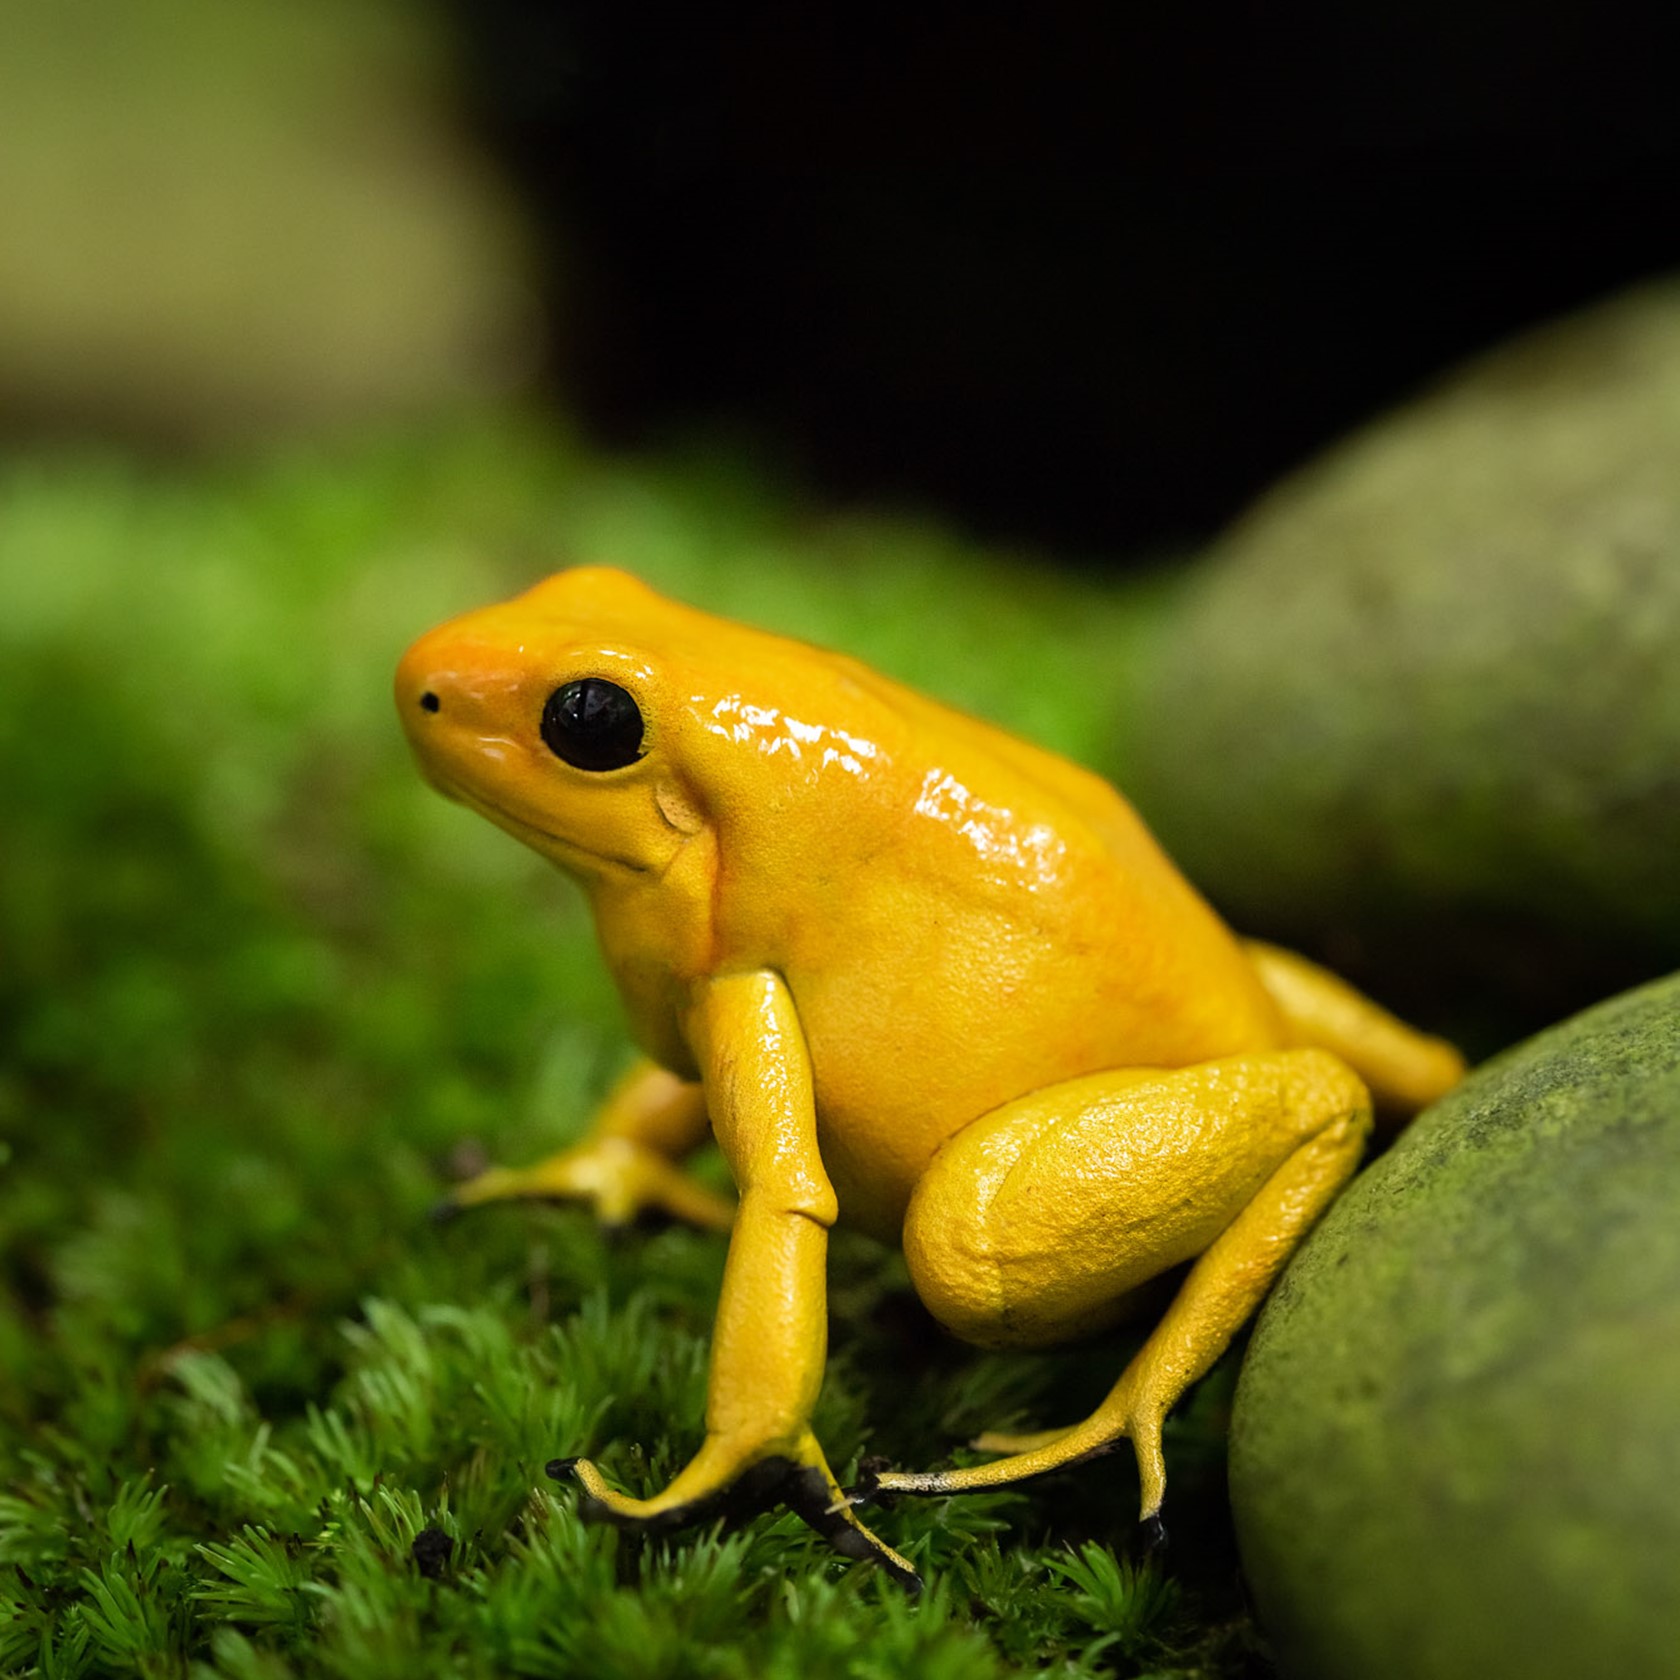 Poison dart frog - Wikipedia